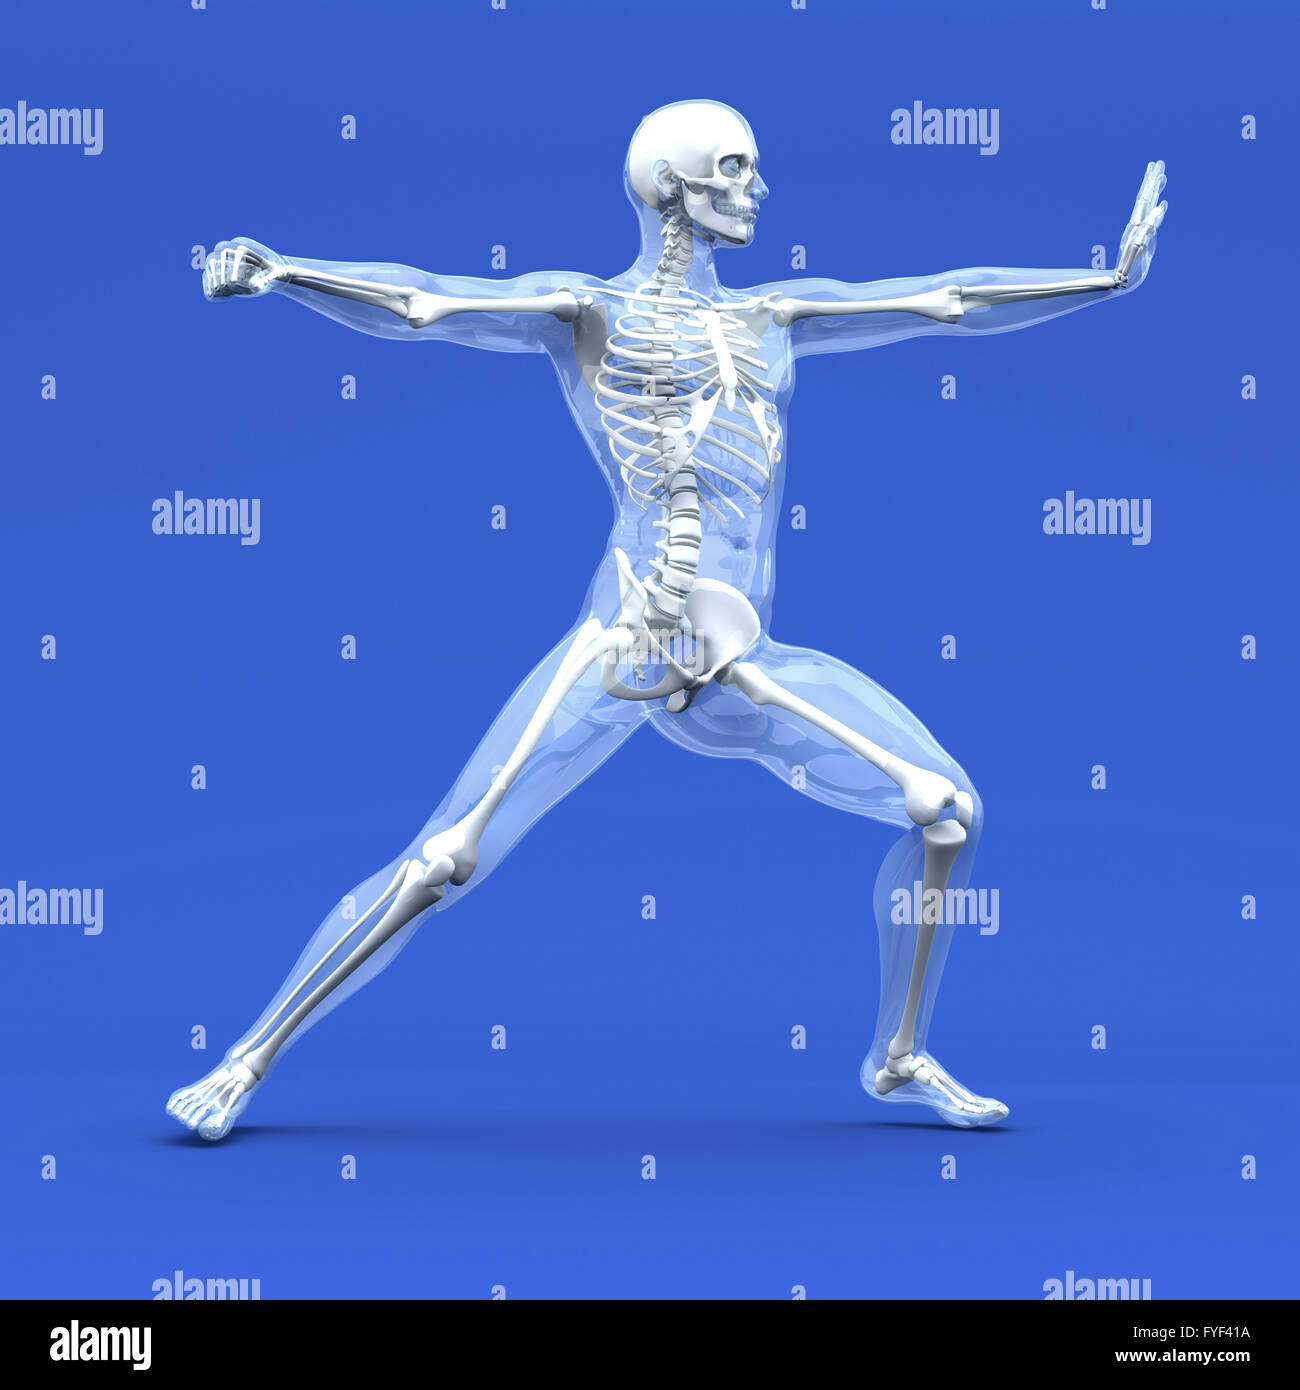 Anatomy - Martial Arts Stock Photo - Alamy